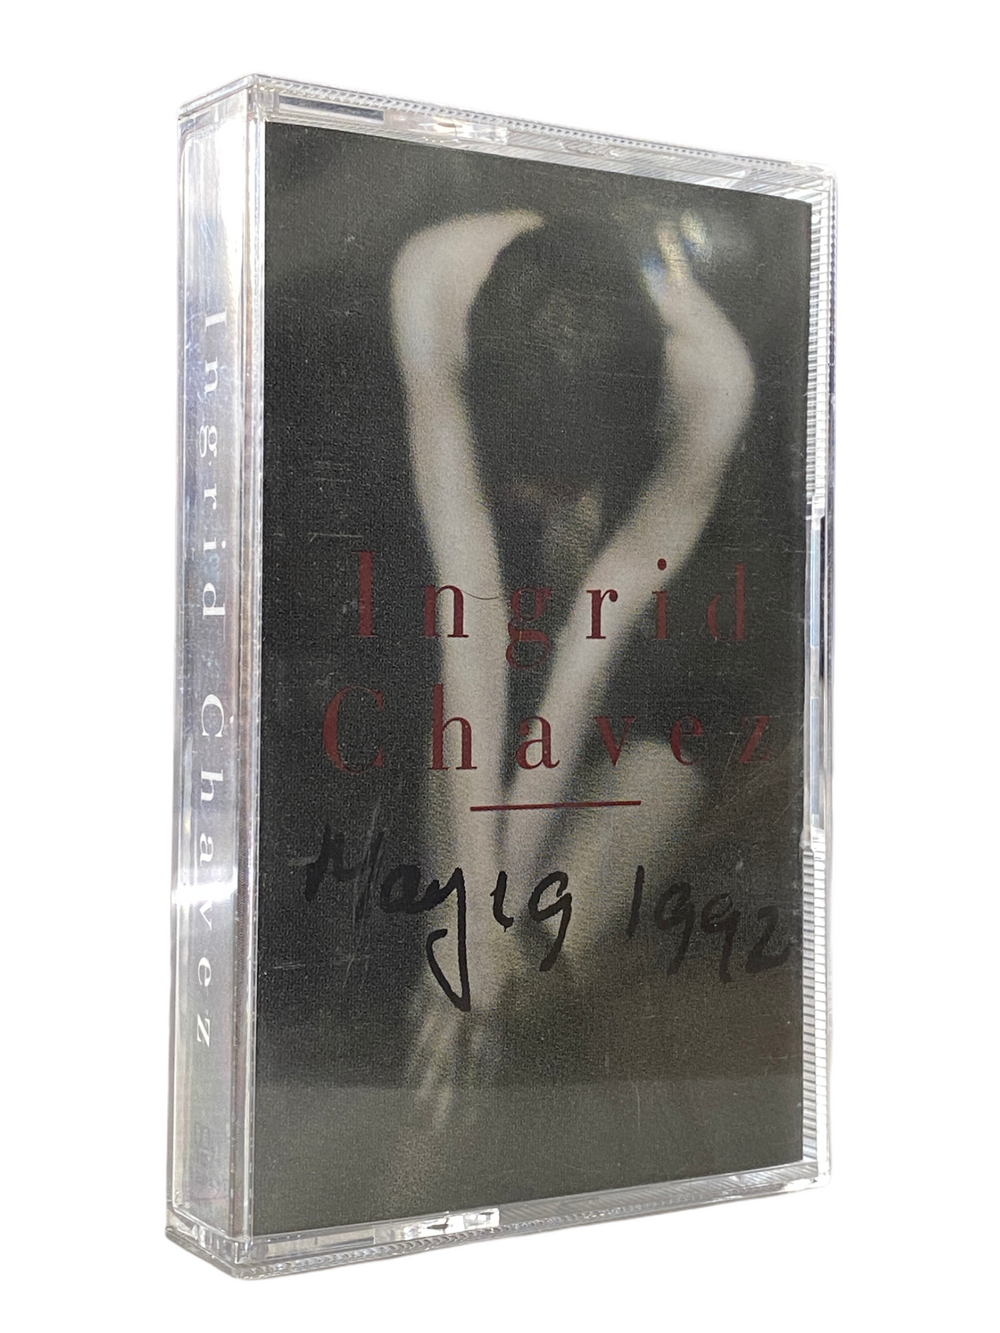 Prince – Ingrid Chavez May 19 1992 Original Cassette Tape  1991 Release Prince